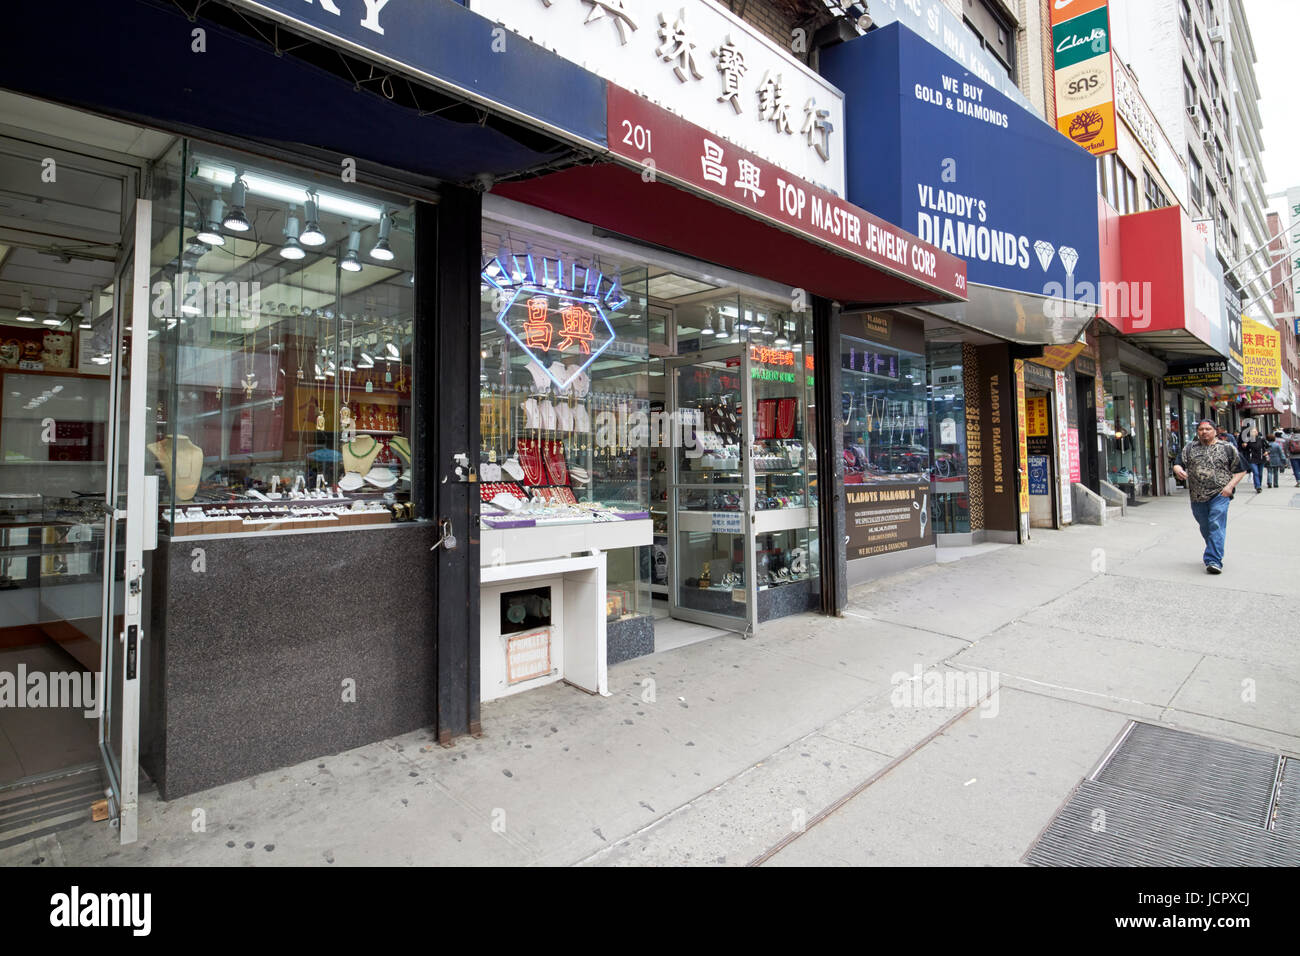 chinatown jewelry shops on canal street New York City USA Stock Photo